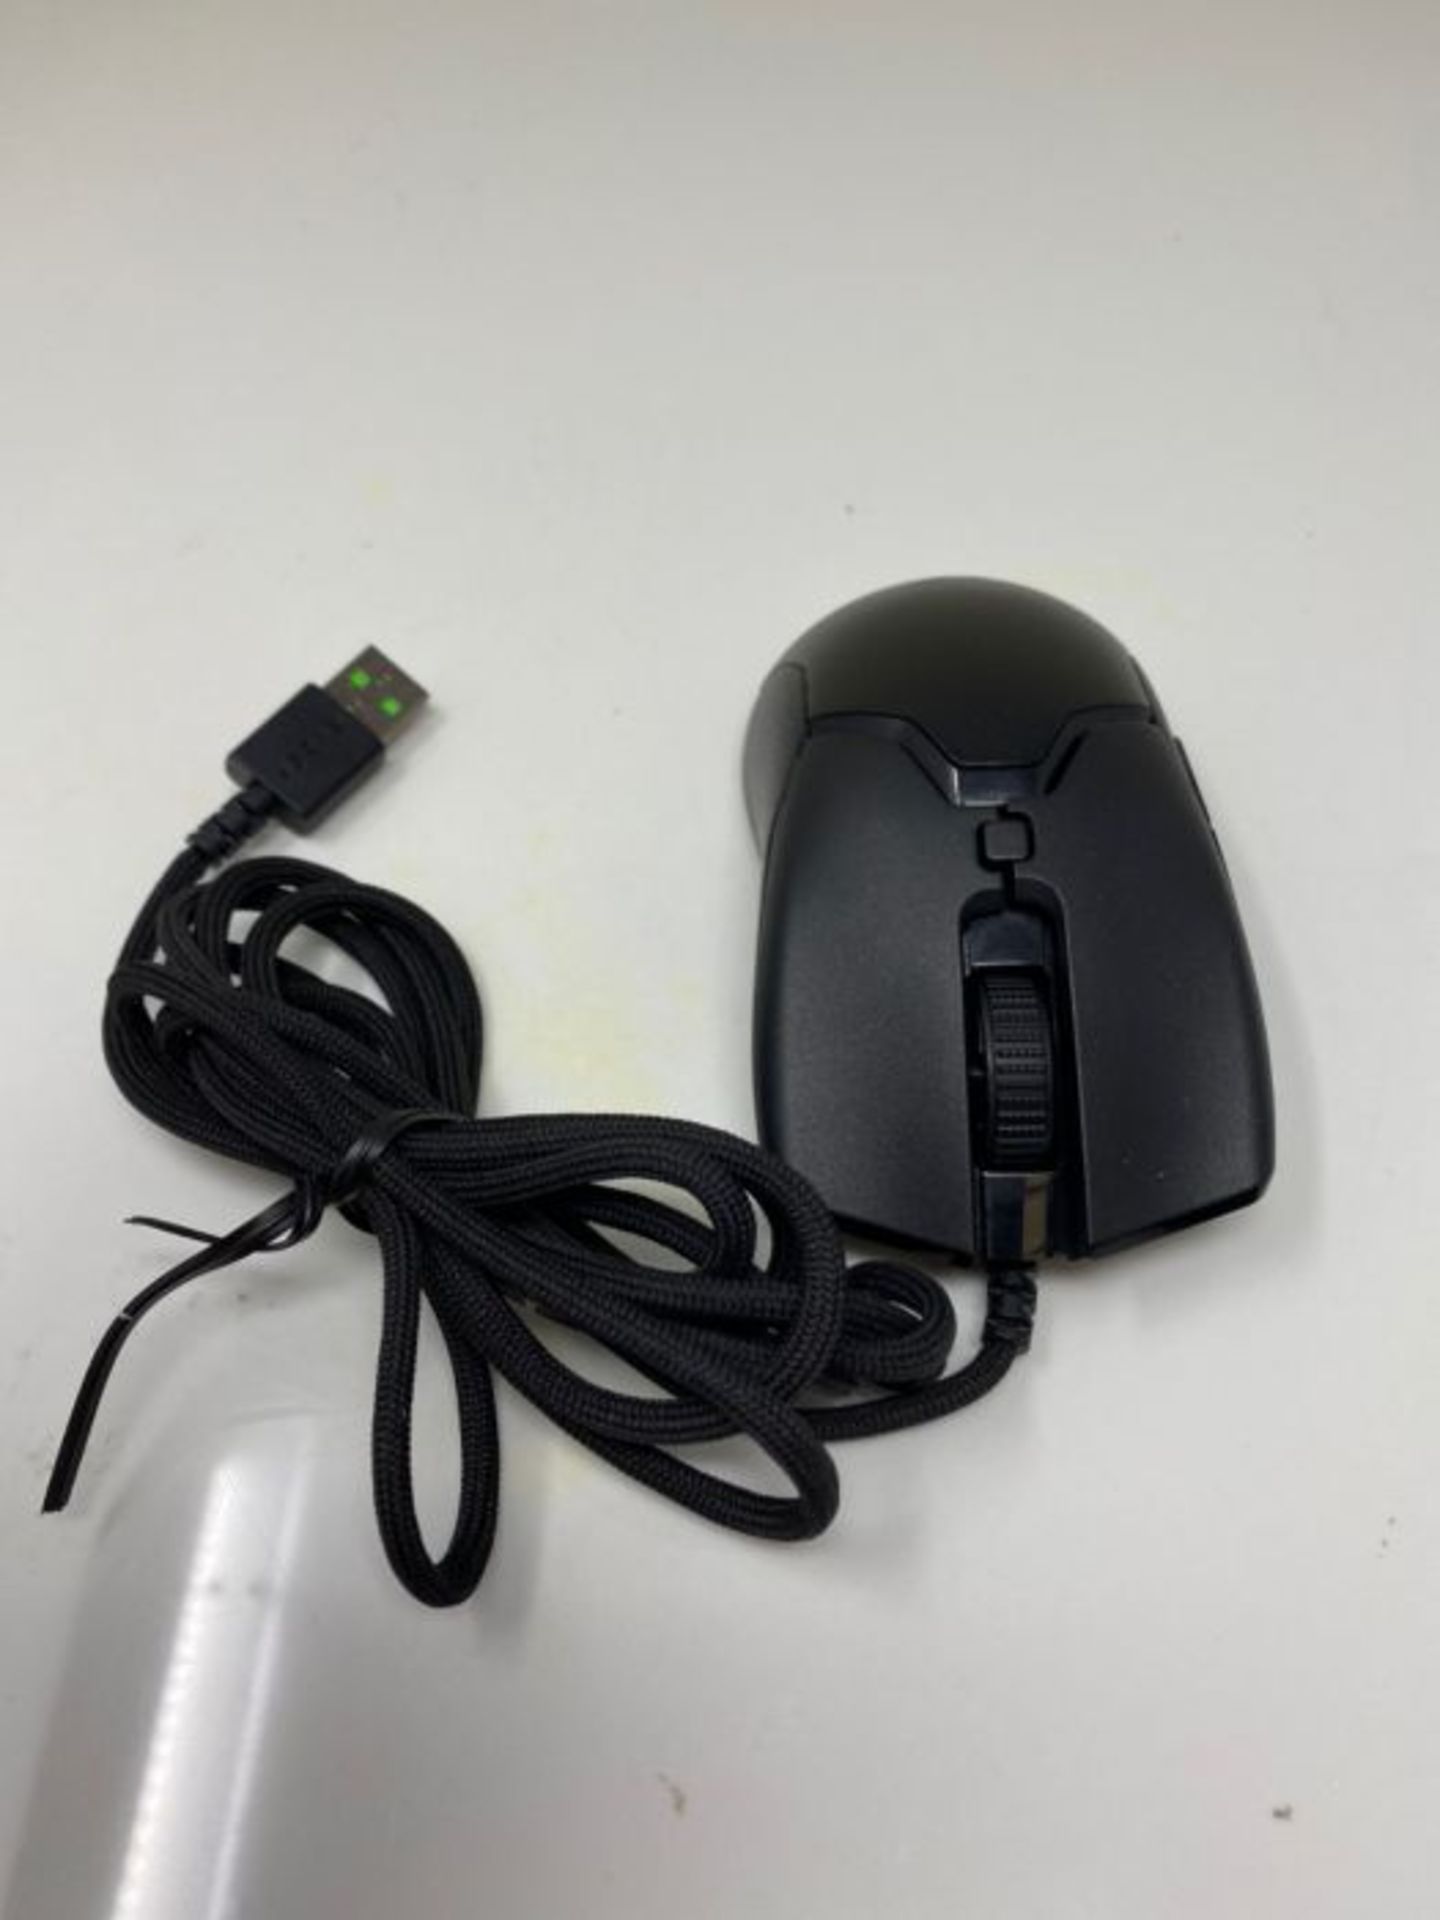 Razer Viper Mini Ultra-Lightweight Gaming Mouse with Razer"! Chroma RGB - Image 3 of 3